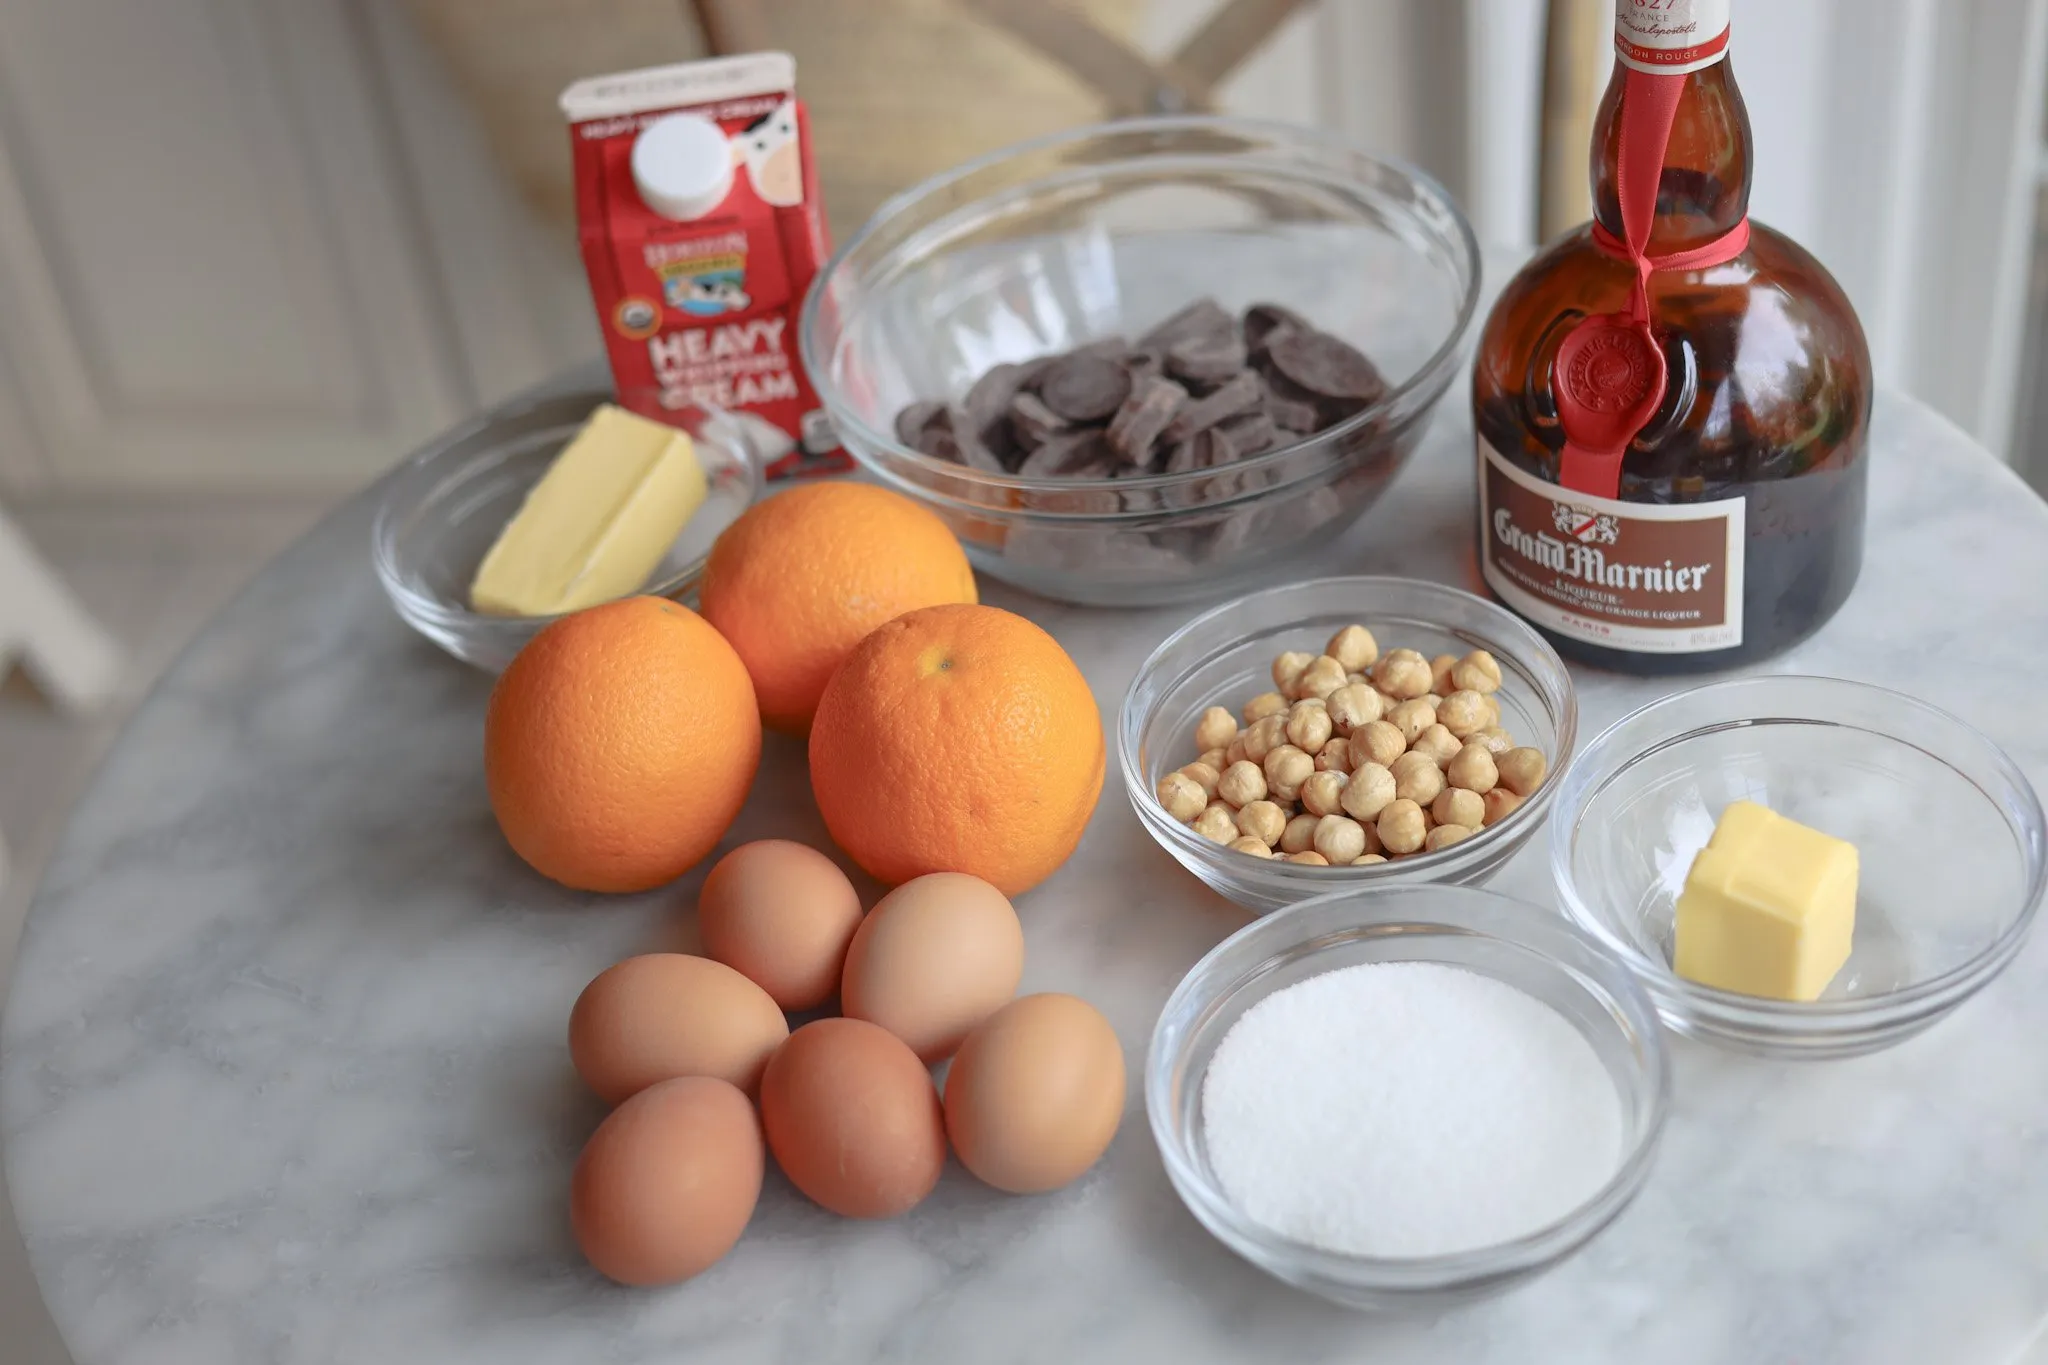 Making the Buche de Noel from scratch - ingredients oranges, butter, dark chocolate, butter, sugar, hazelnuts, grand marnier